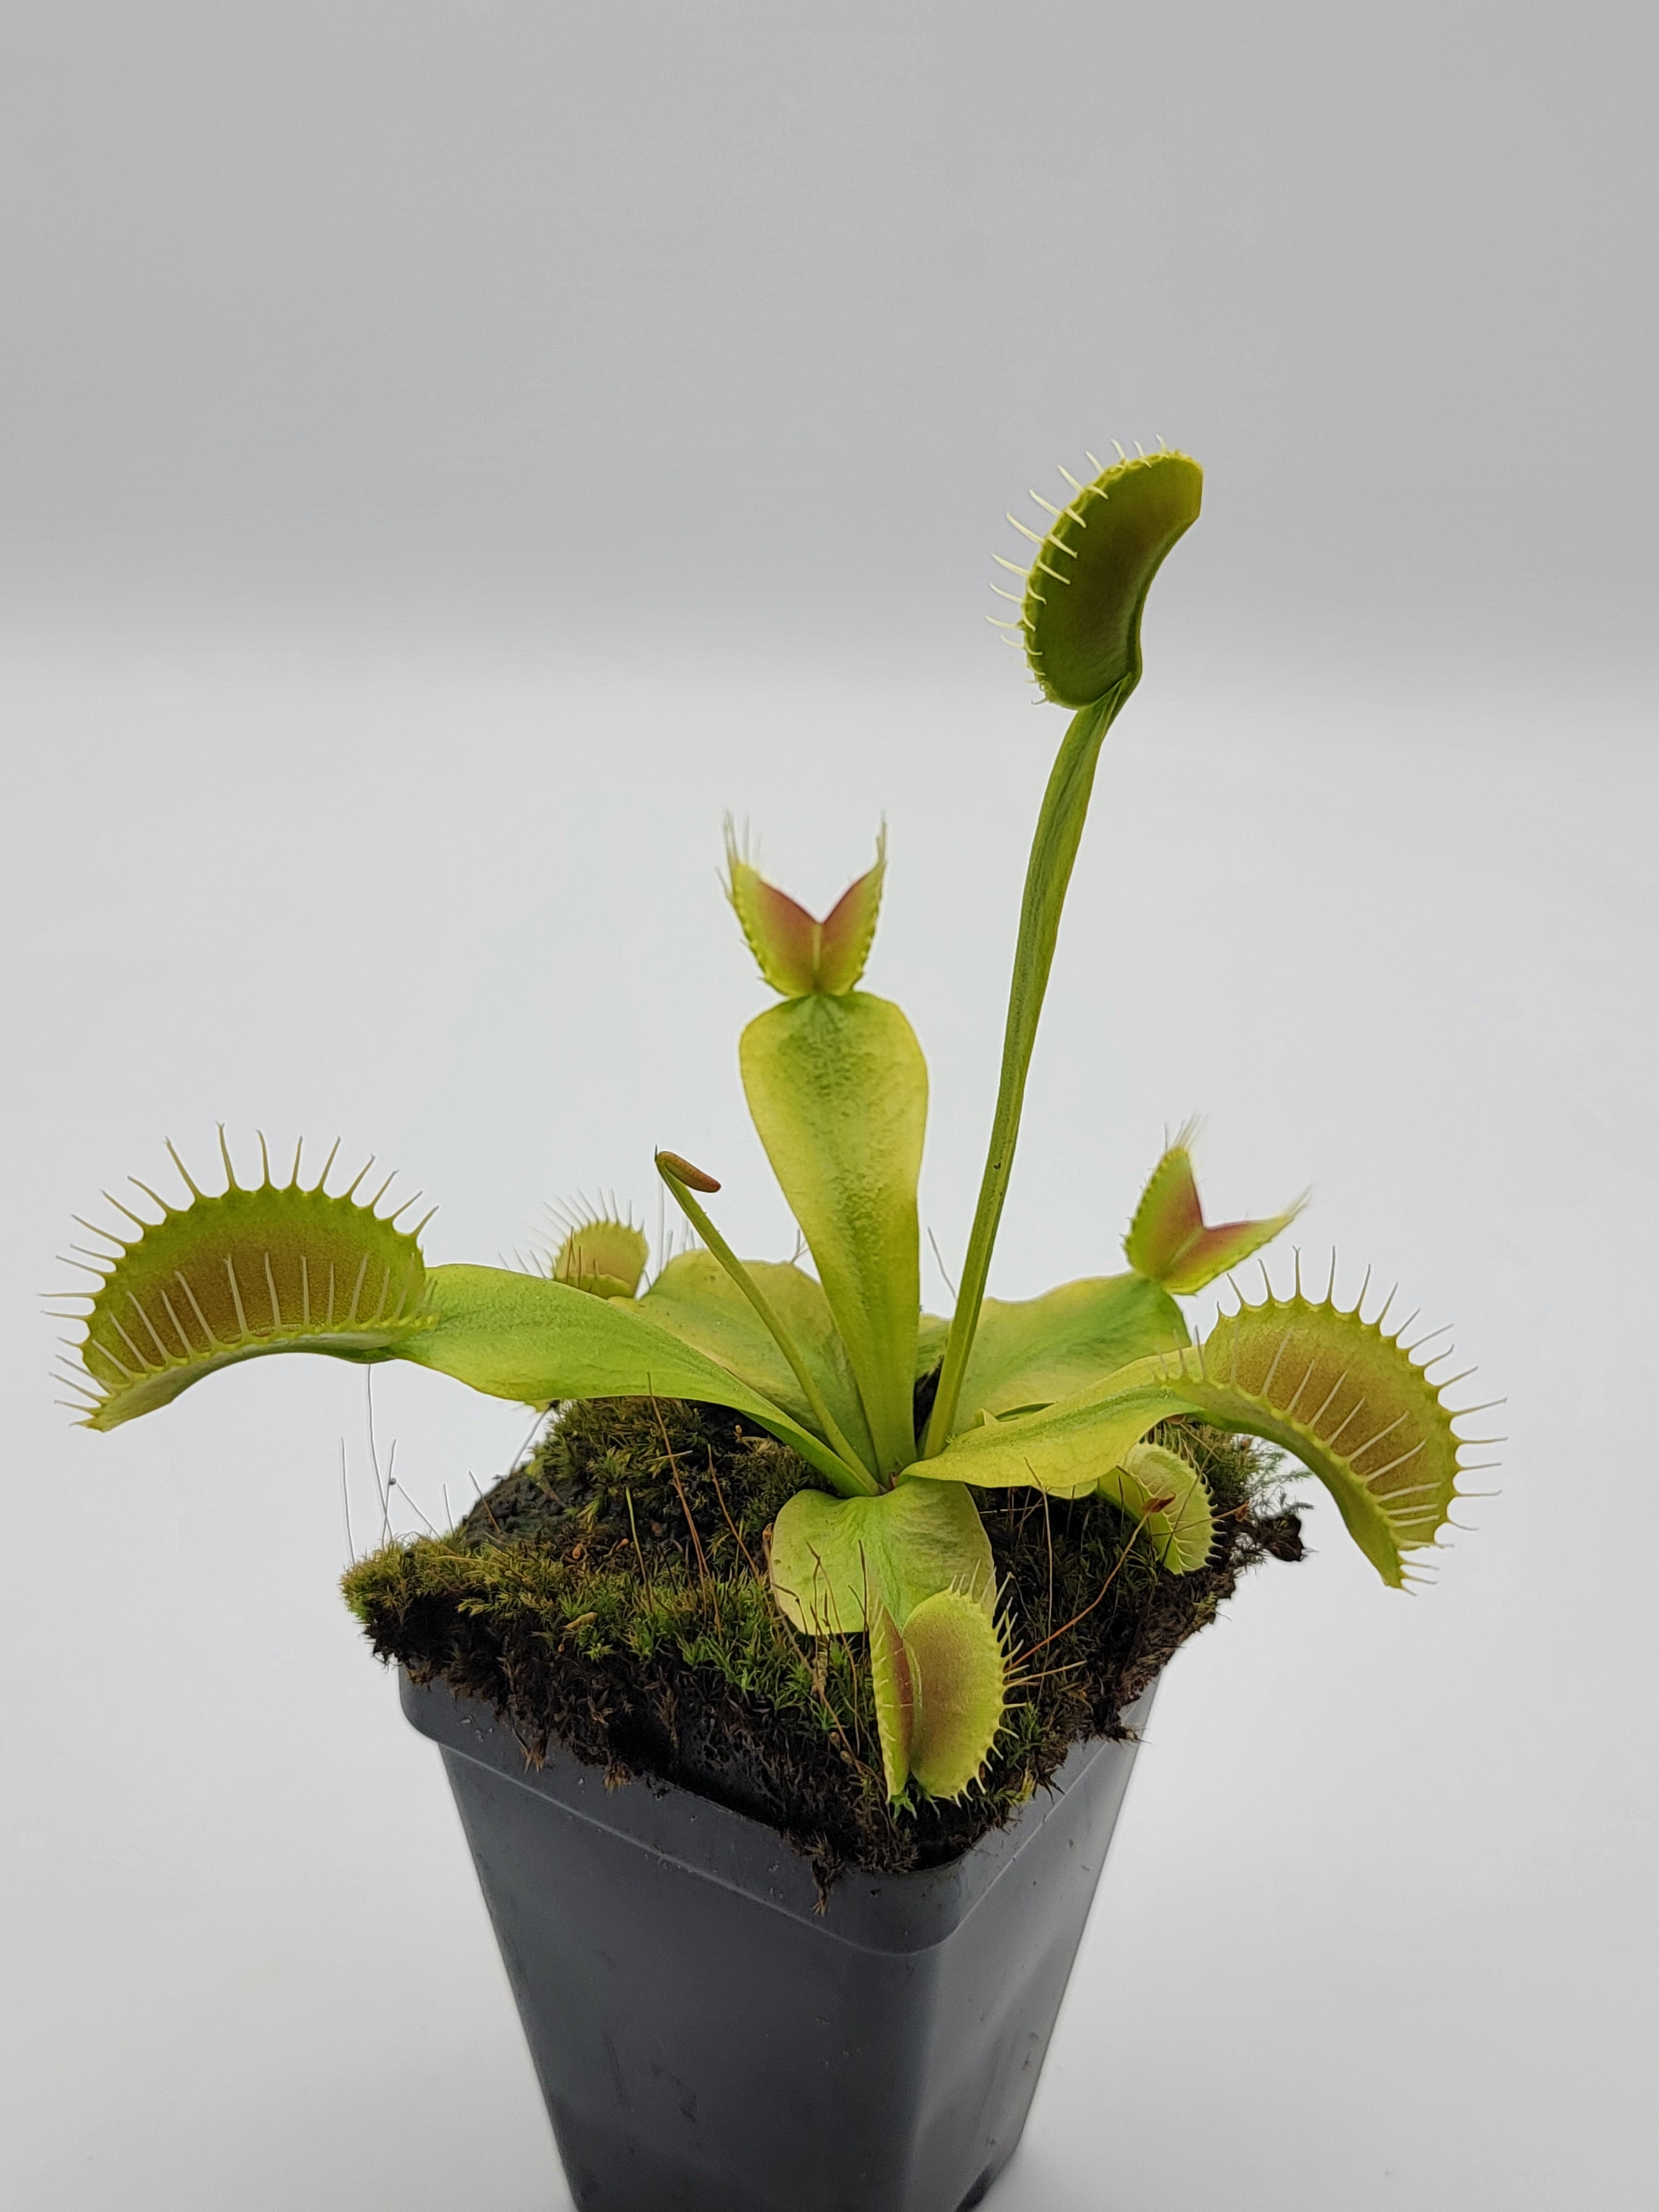 Venus flytrap (Dionaea muscipula) "King Henry"